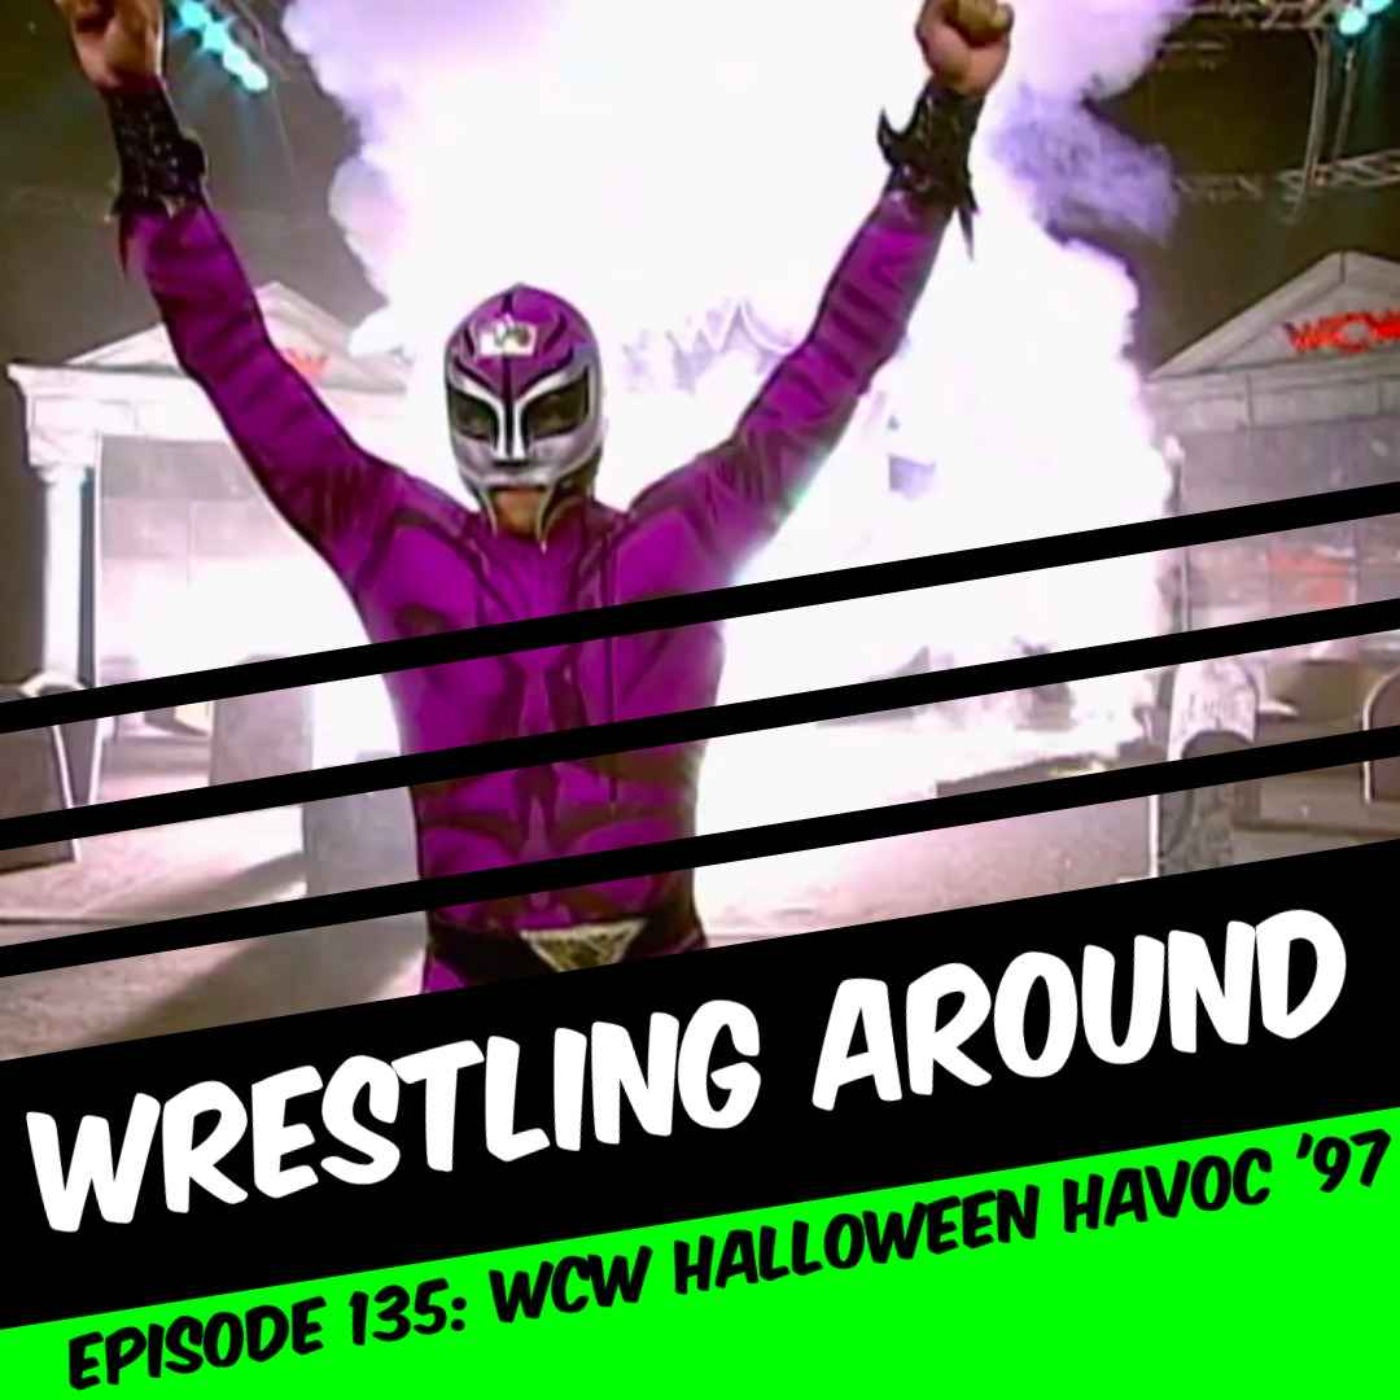 WCW Halloween Havoc '97